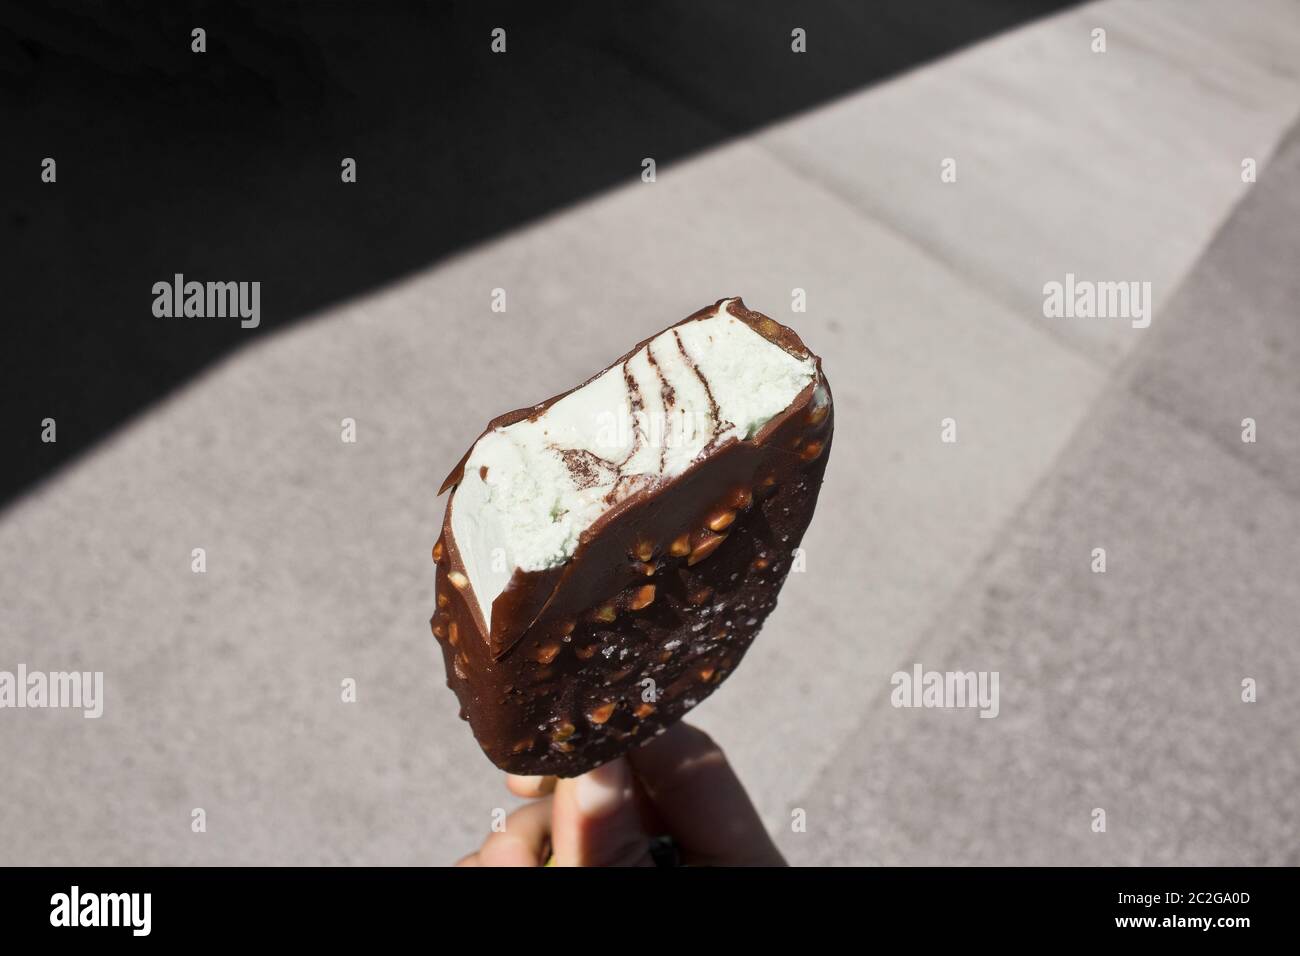 Ice cream with vanilla, chocolate and nuts / almonds Stock Photo